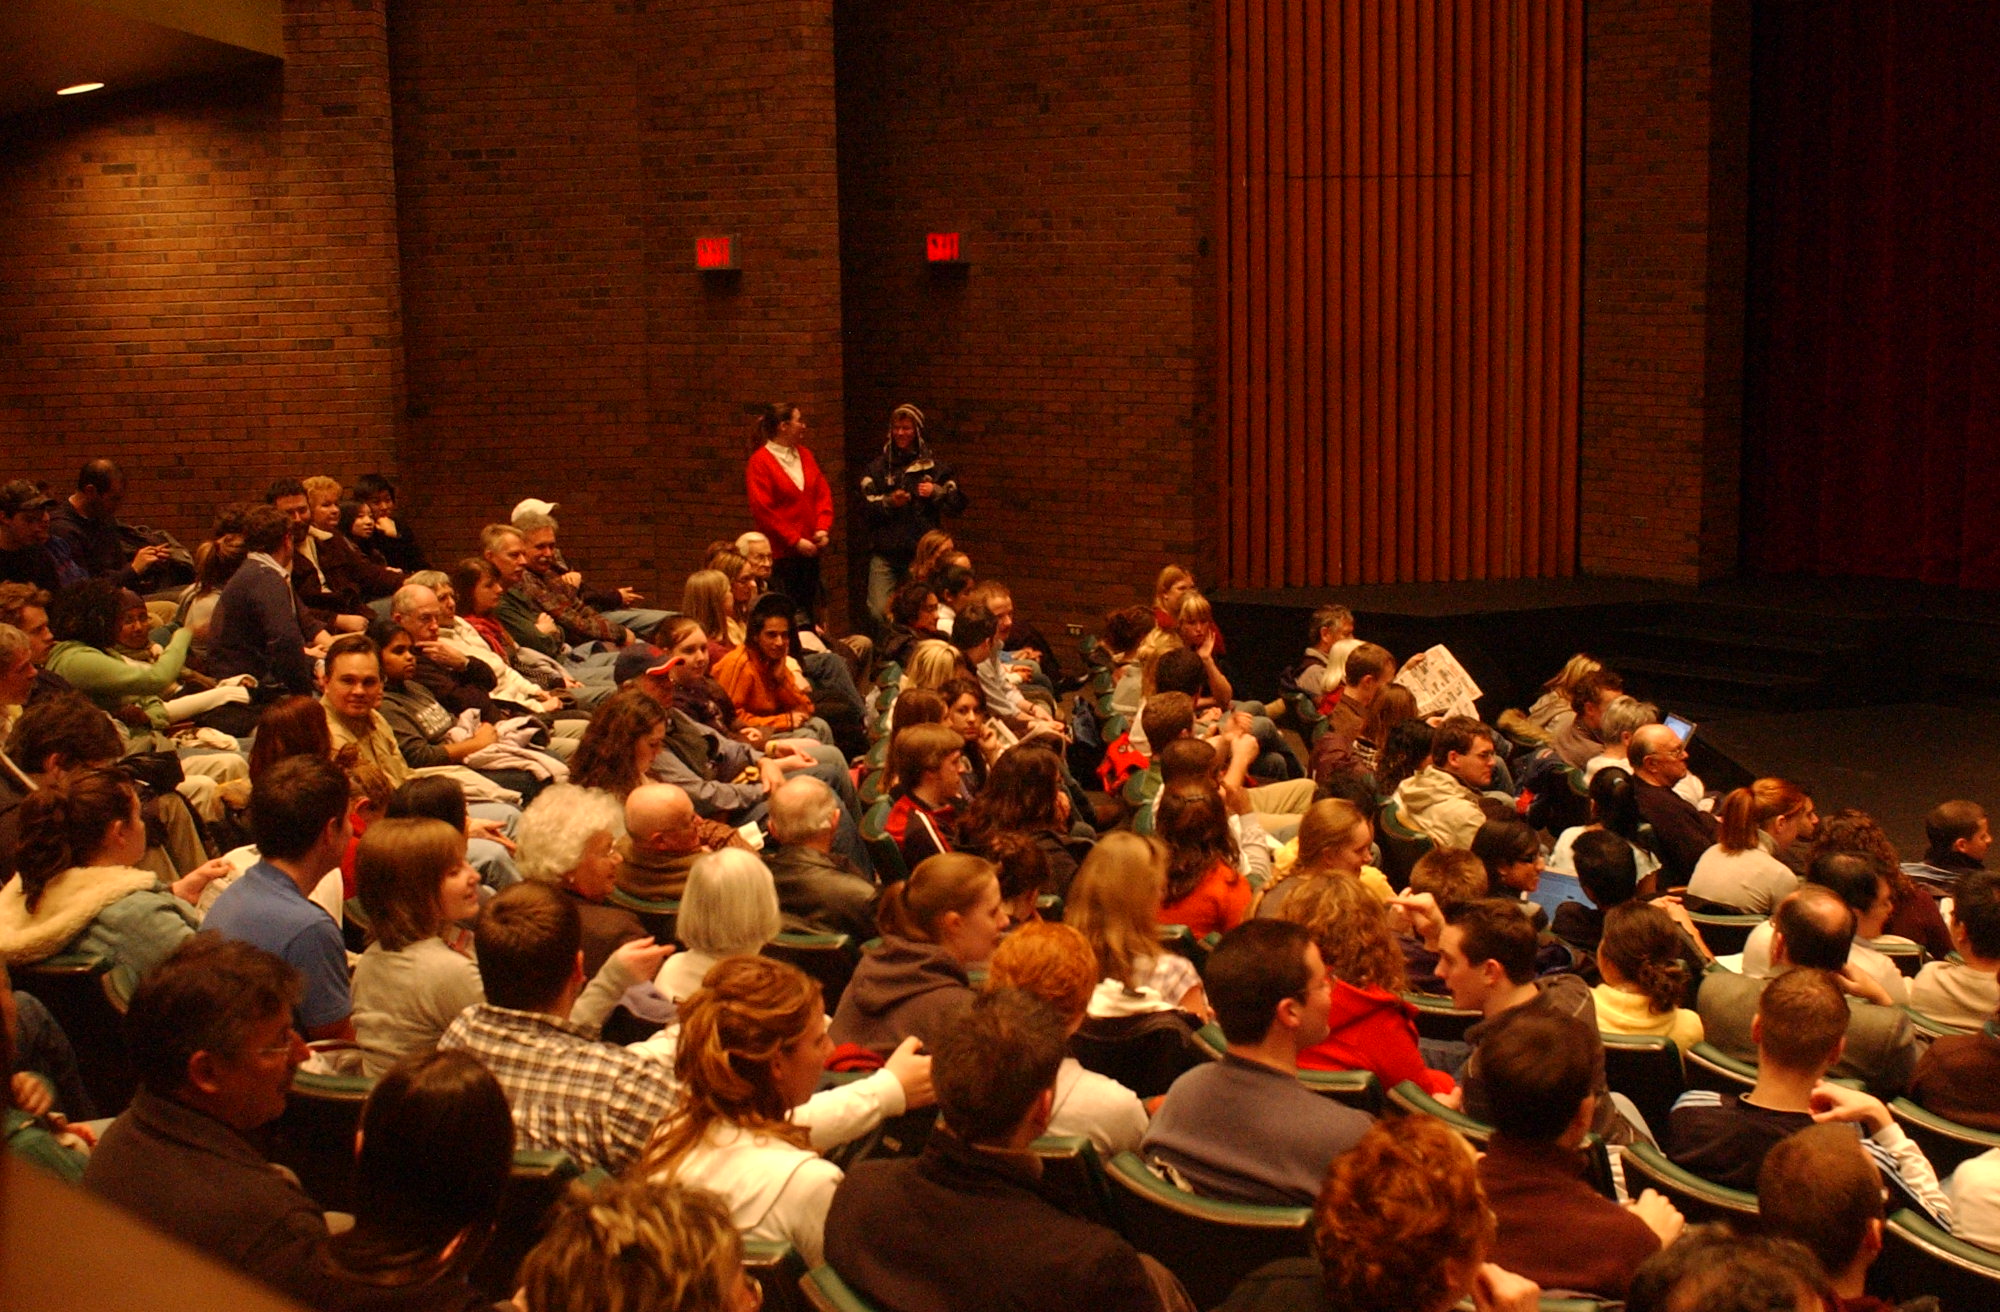 Theatre audience